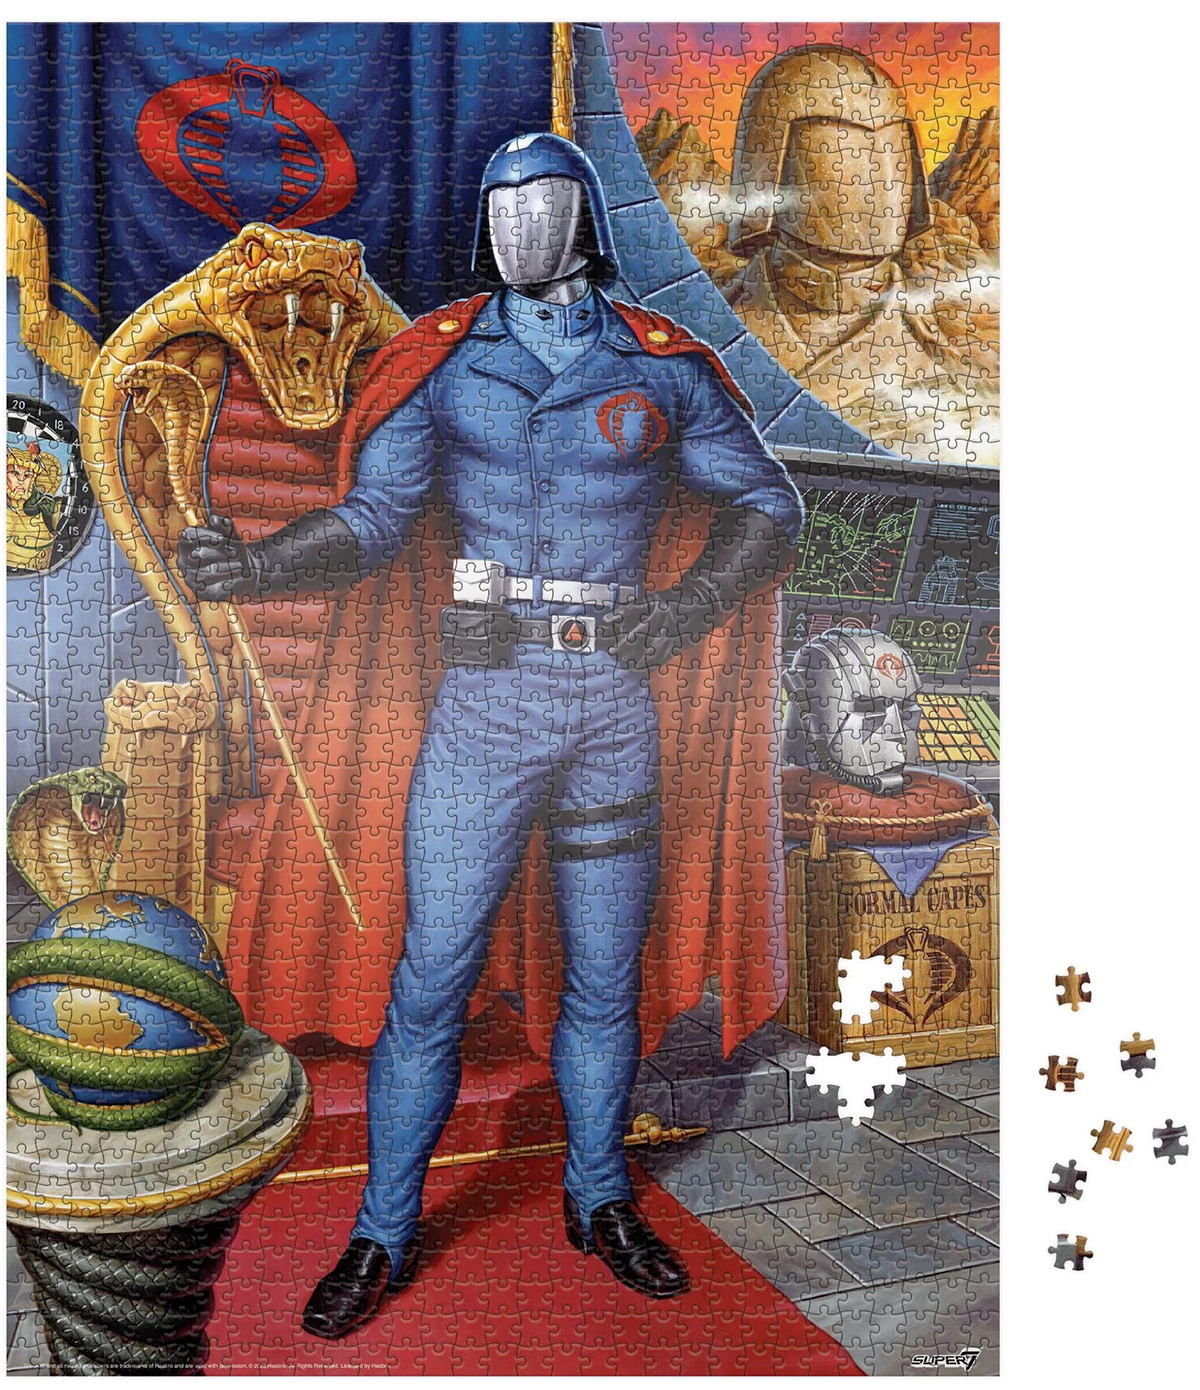 GI Joe Cobra Commander Puzzle with 1,000 pieces